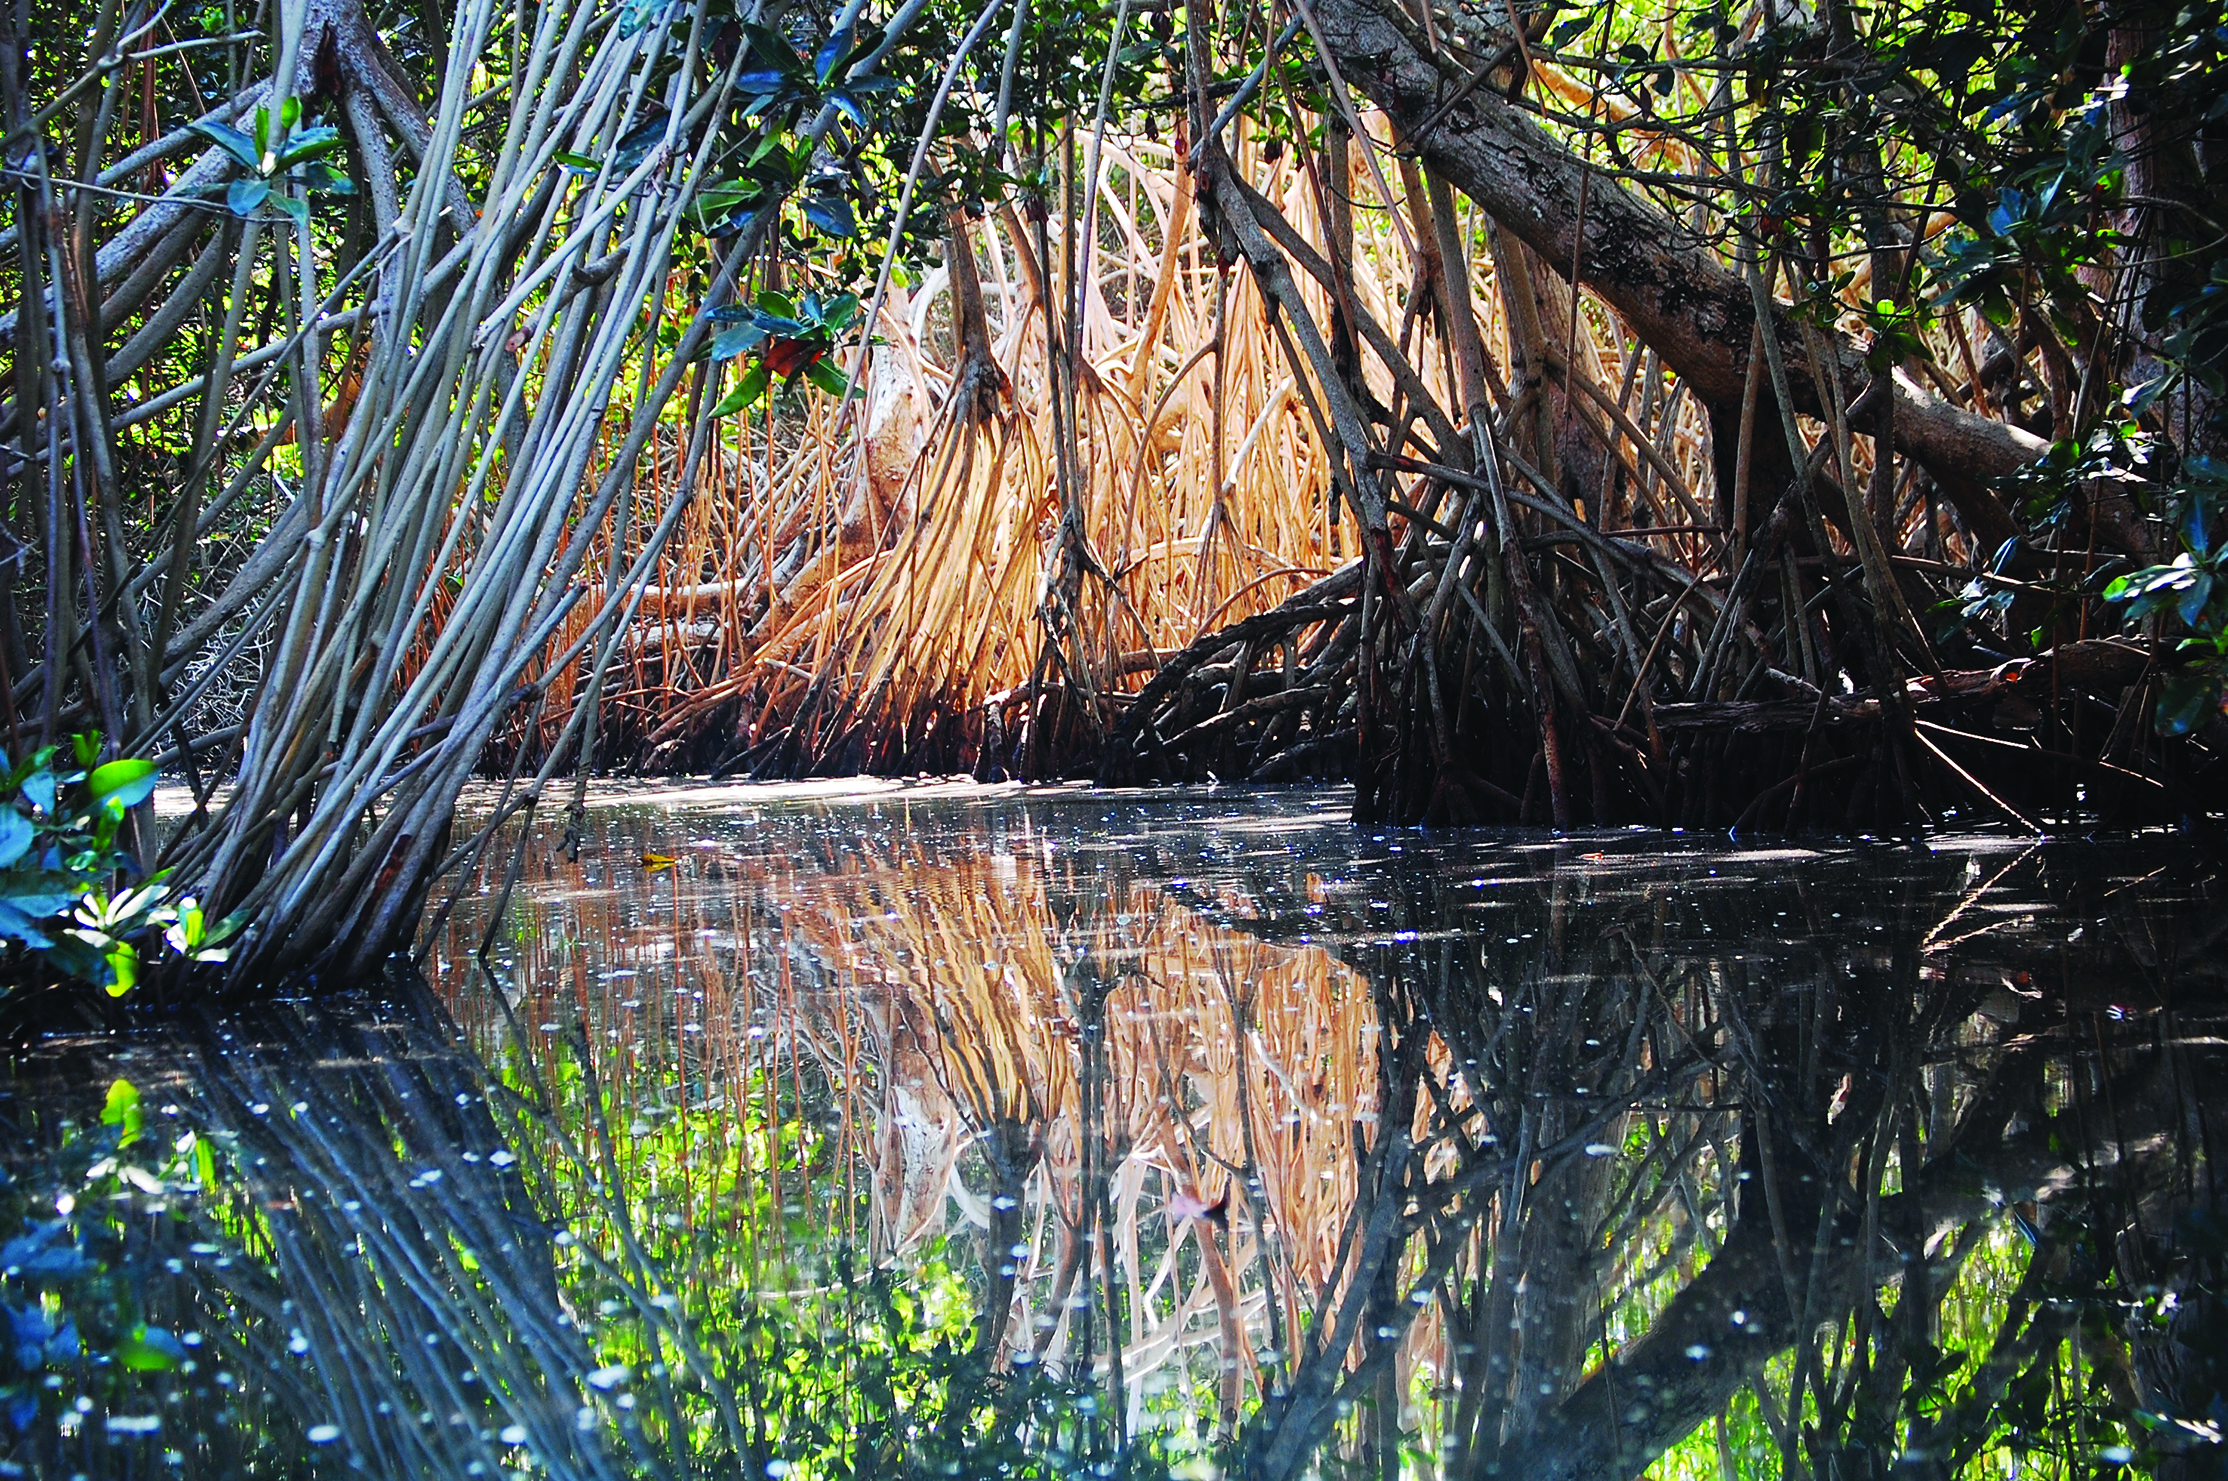  Thick-mangroves-line-the-dinghy-jungle-tour-at-Tenacatita